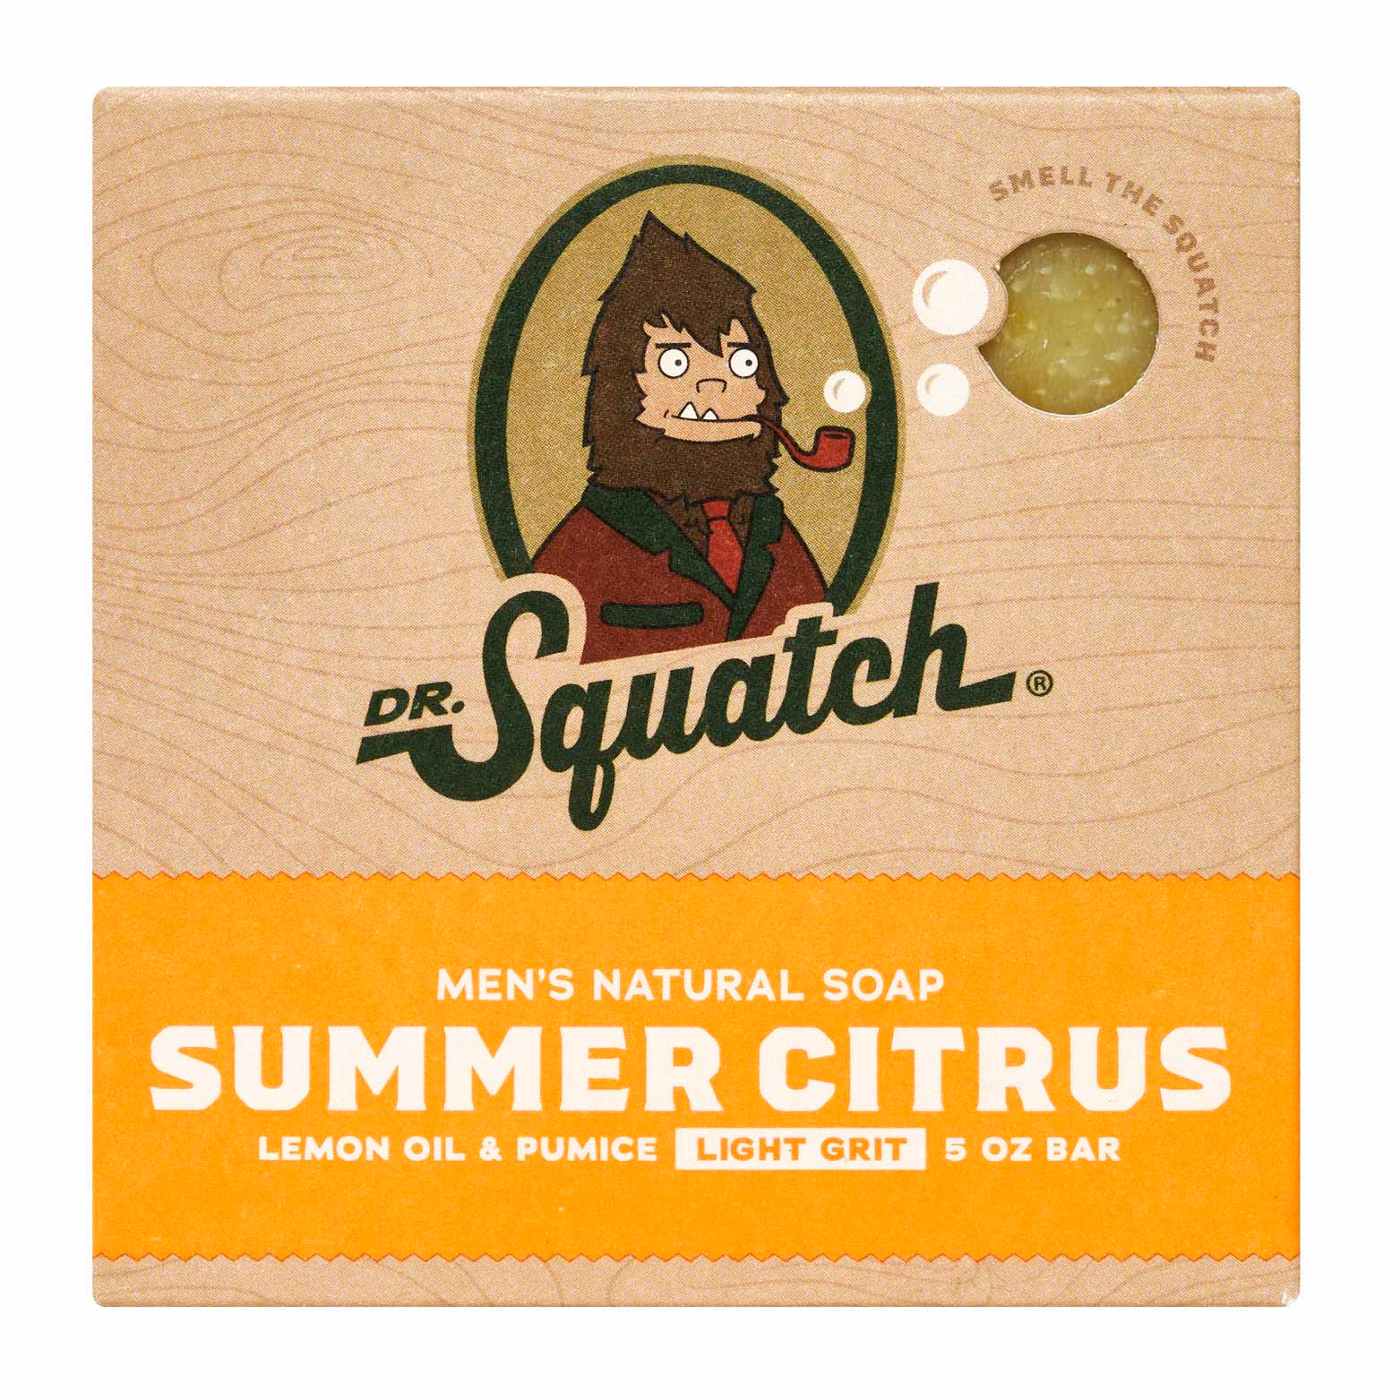 Dr. Squatch Men's Natural Soap - Summer Citrus; image 1 of 5